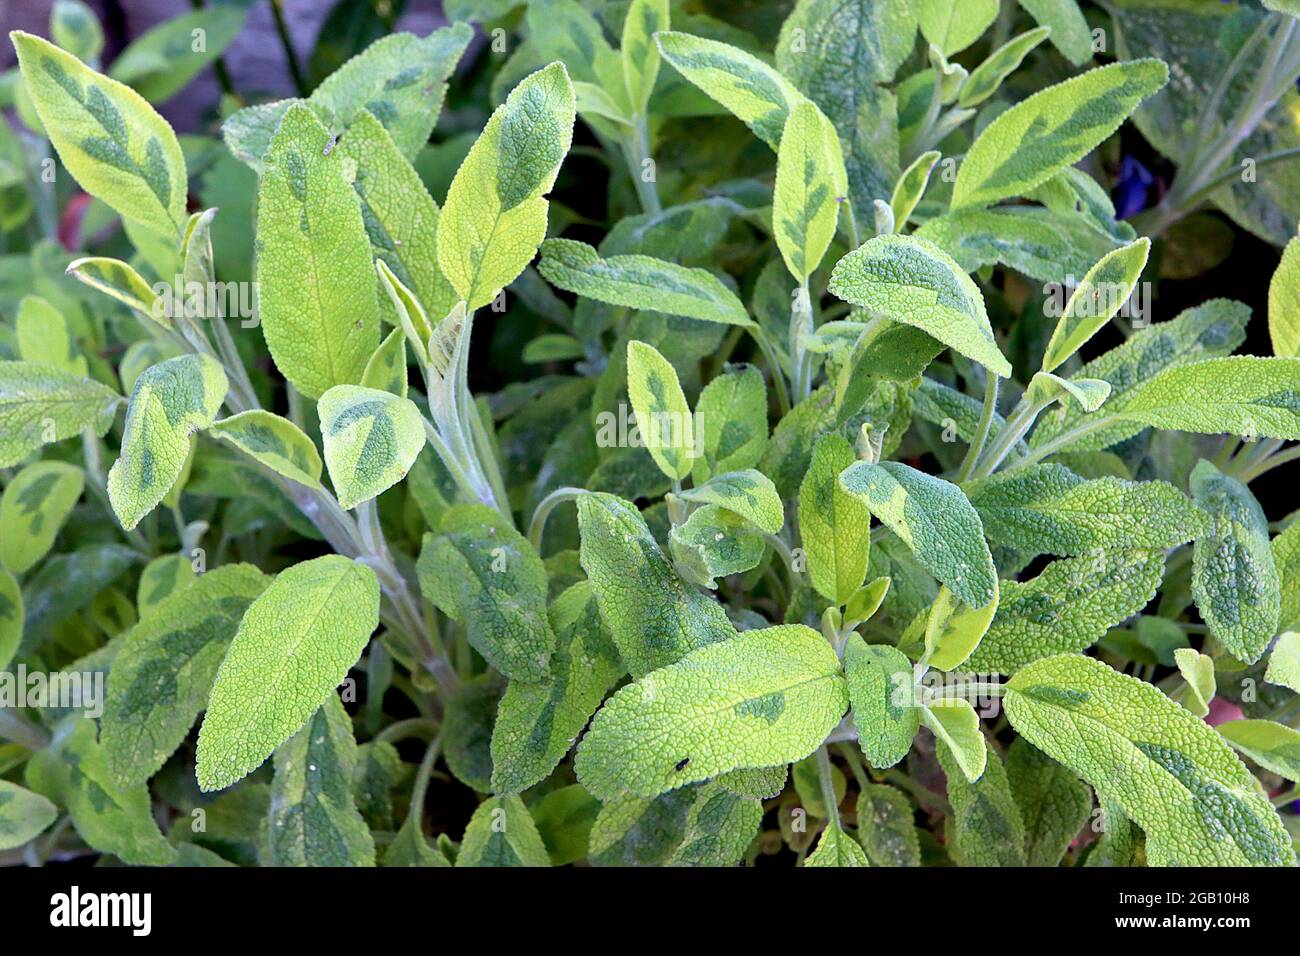 Salvia officinalis ‘Icterina’ sage Icterina – marbled gold and dark green edible leaves,  June, England, UK Stock Photo